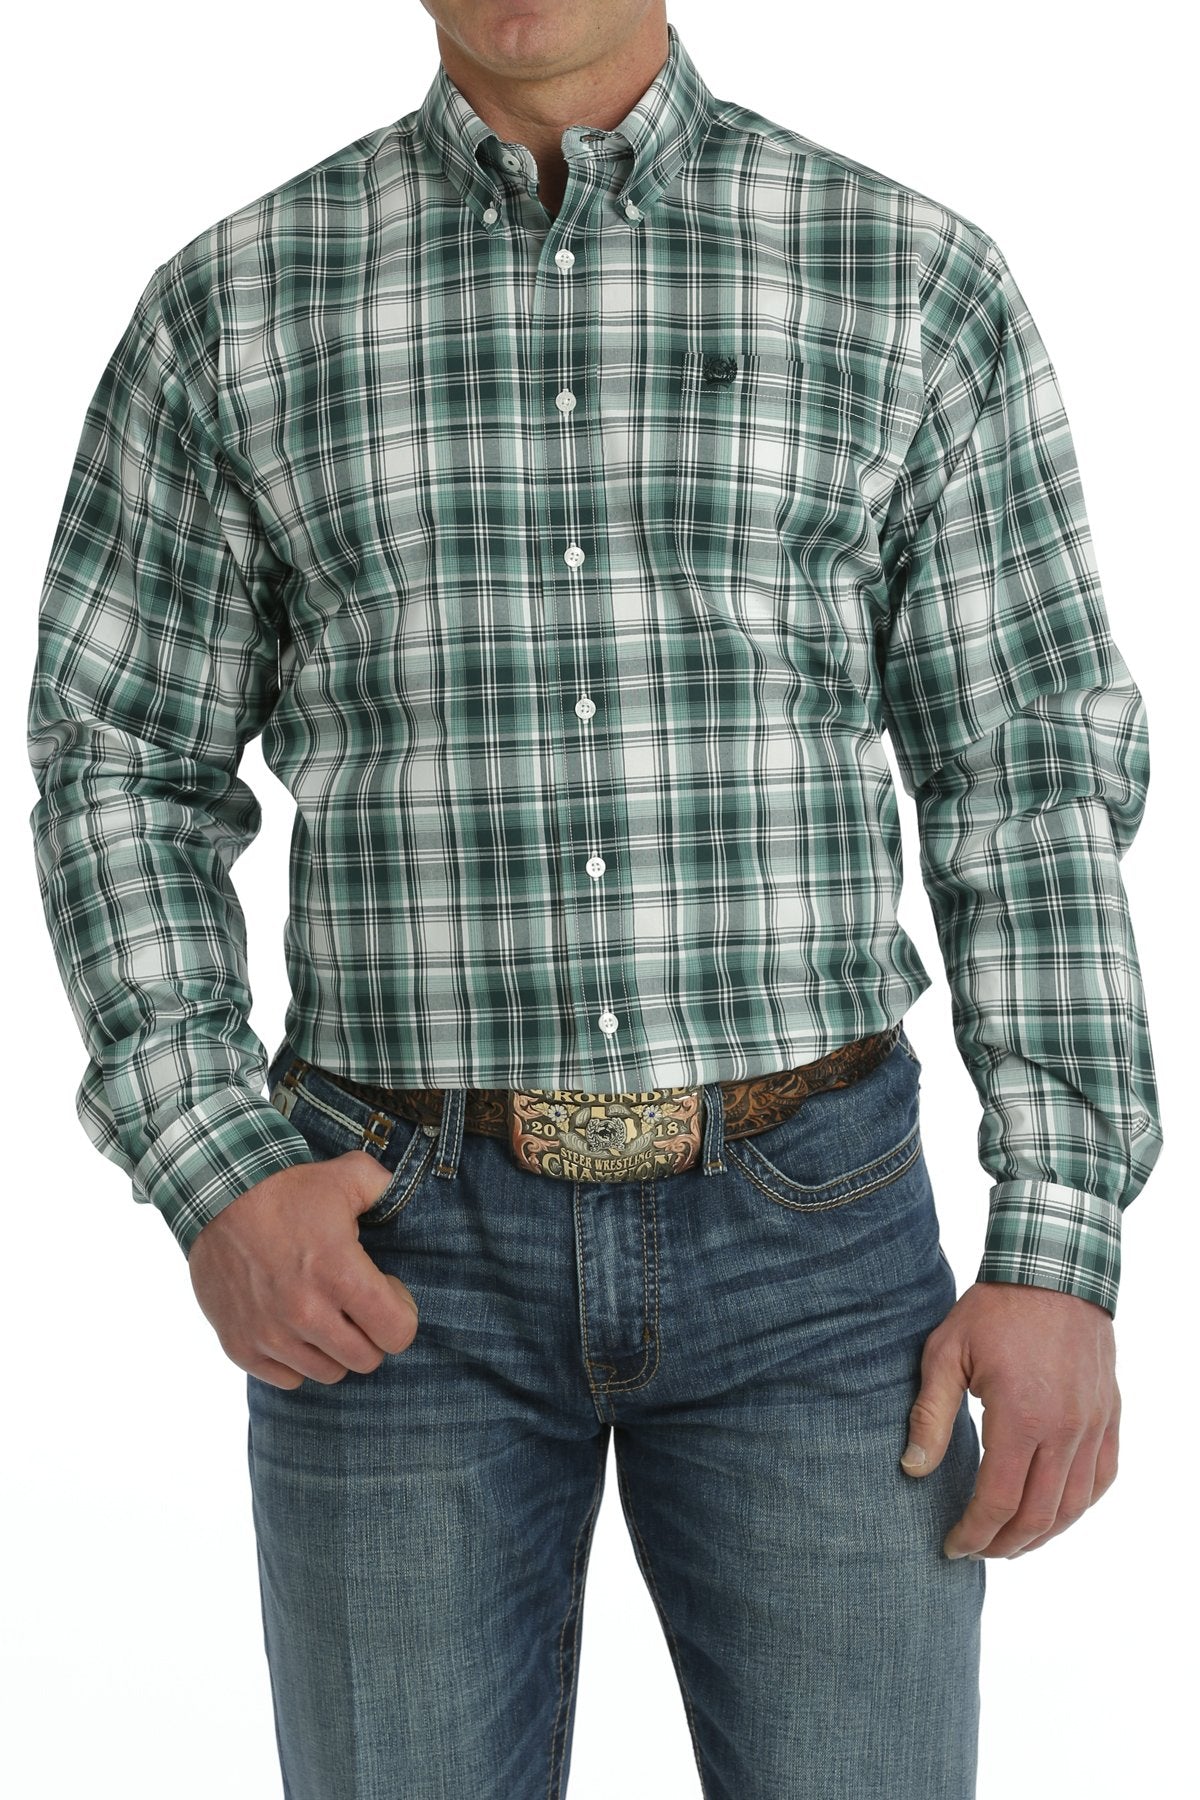 Cinch Jaded Plaid Men's Button Up Shirt